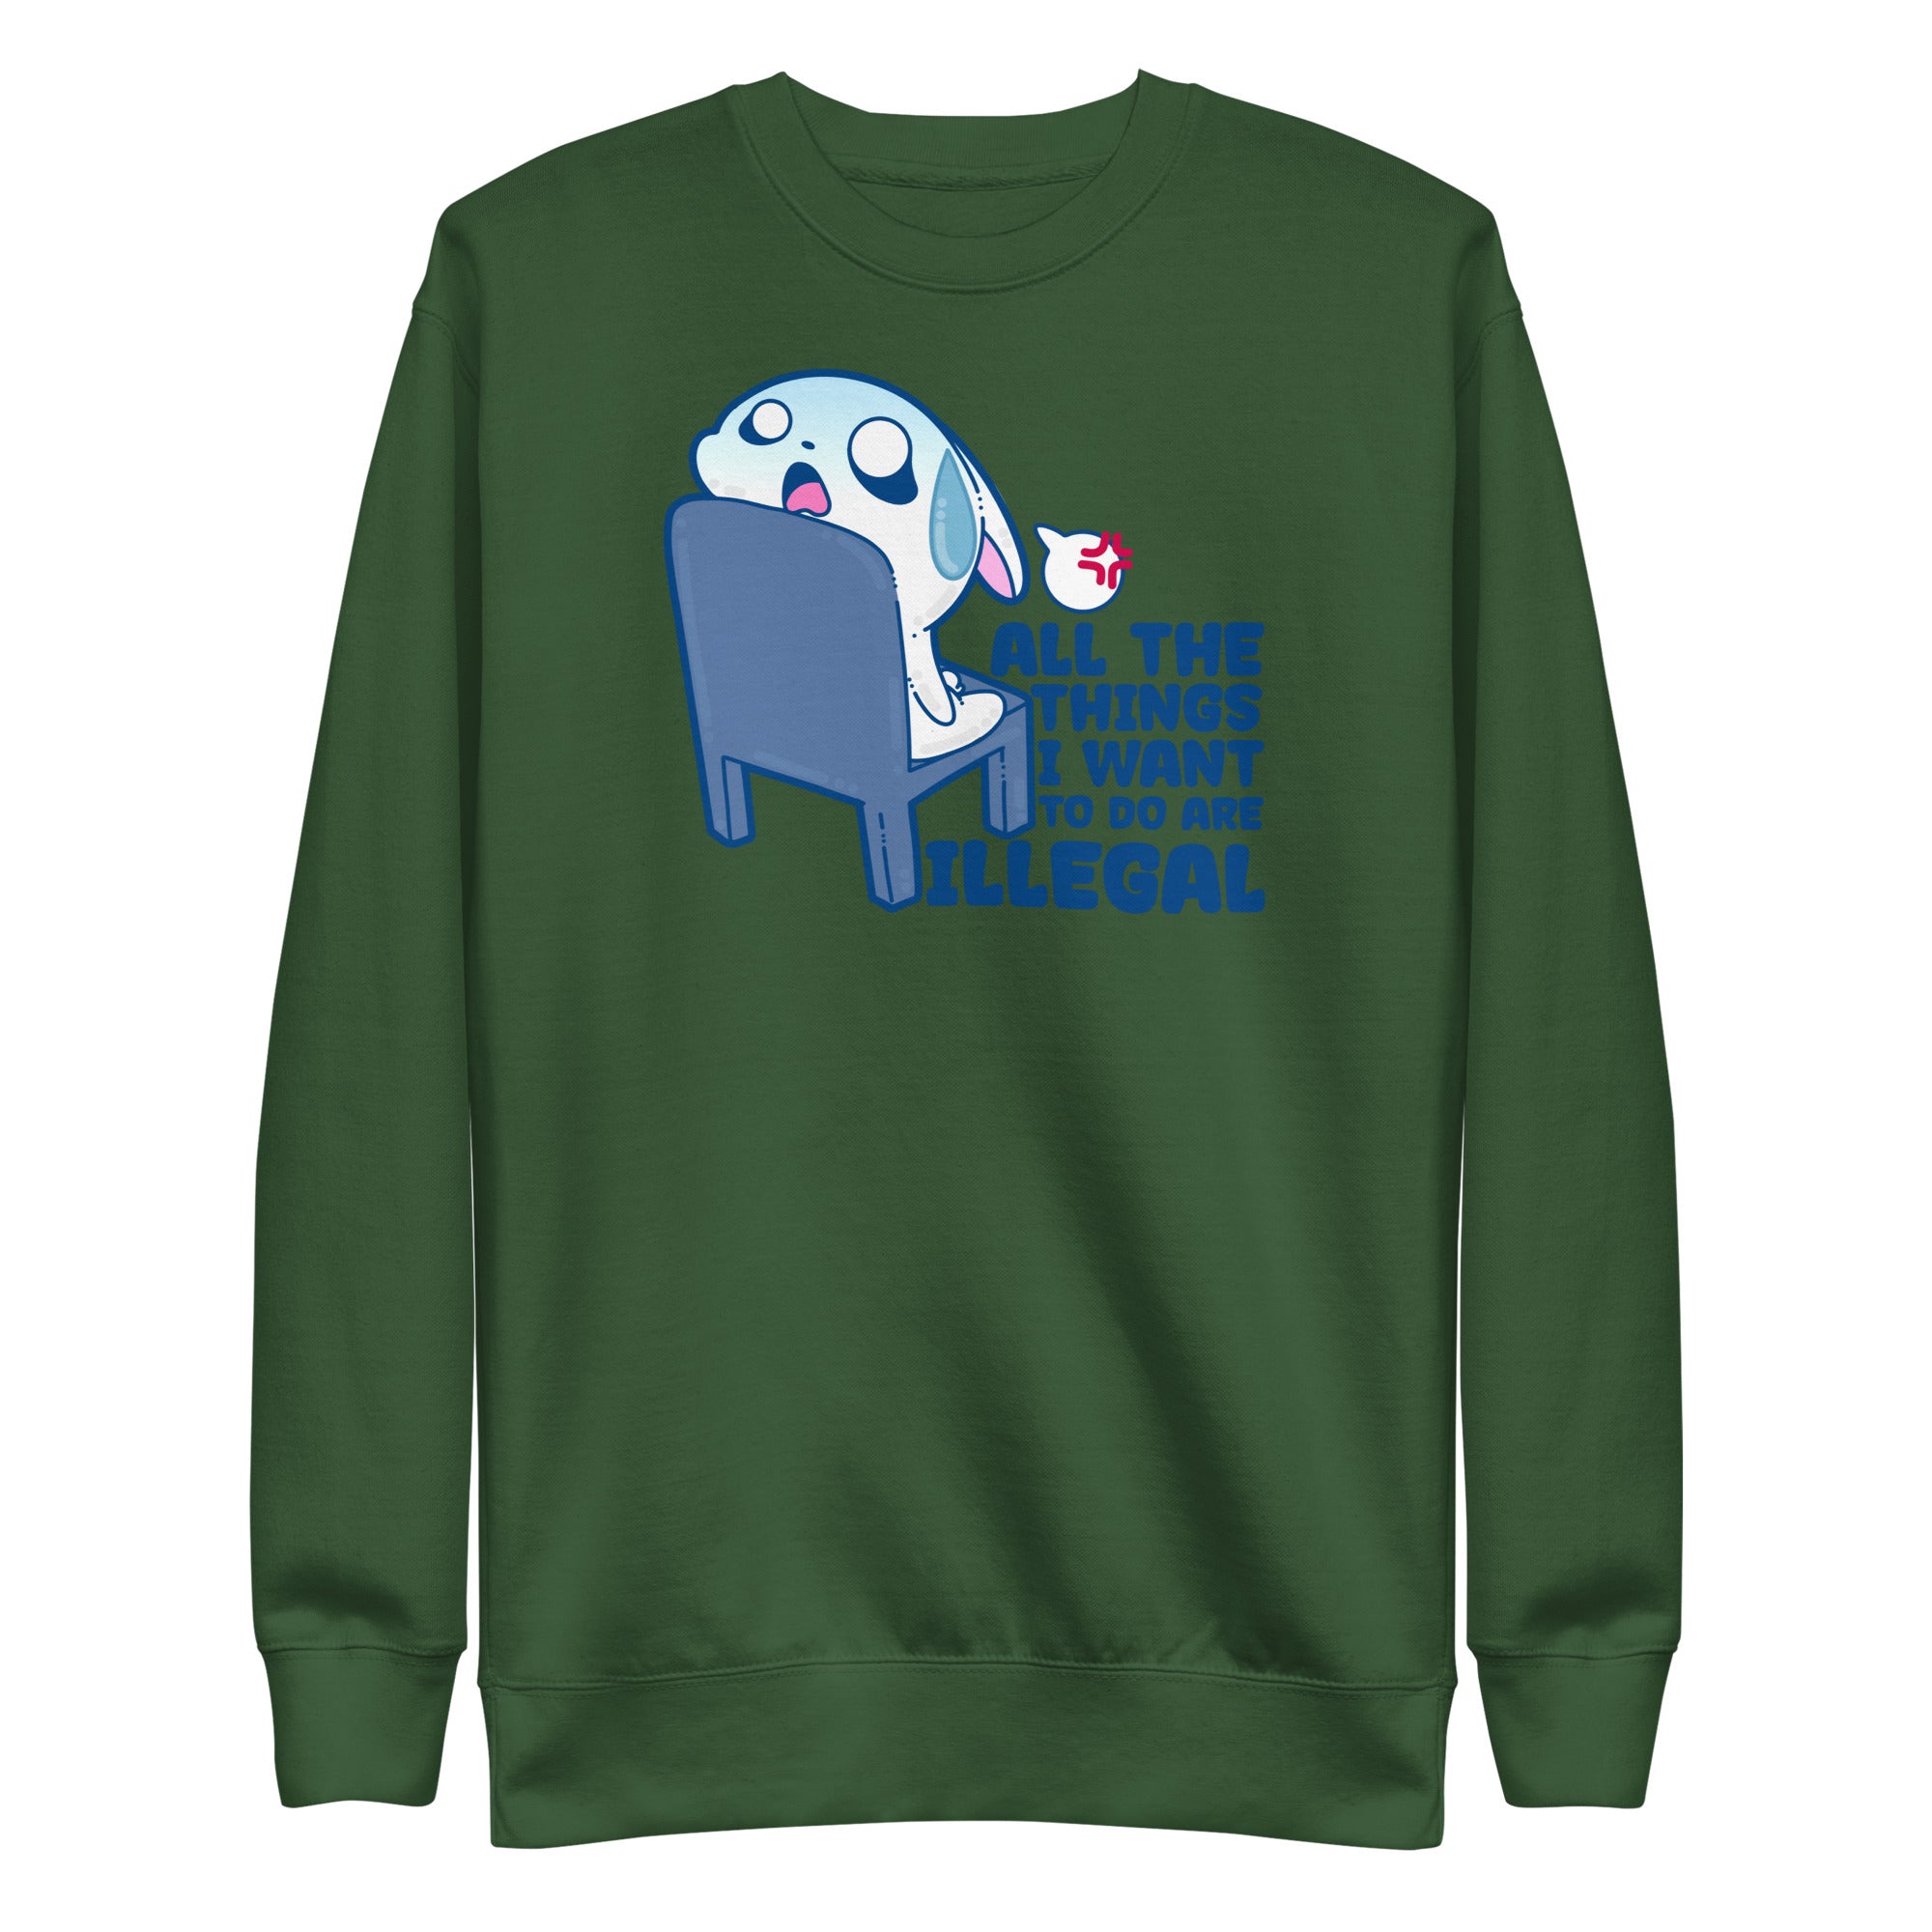 ALL THE THINGS -  Premium Sweatshirt